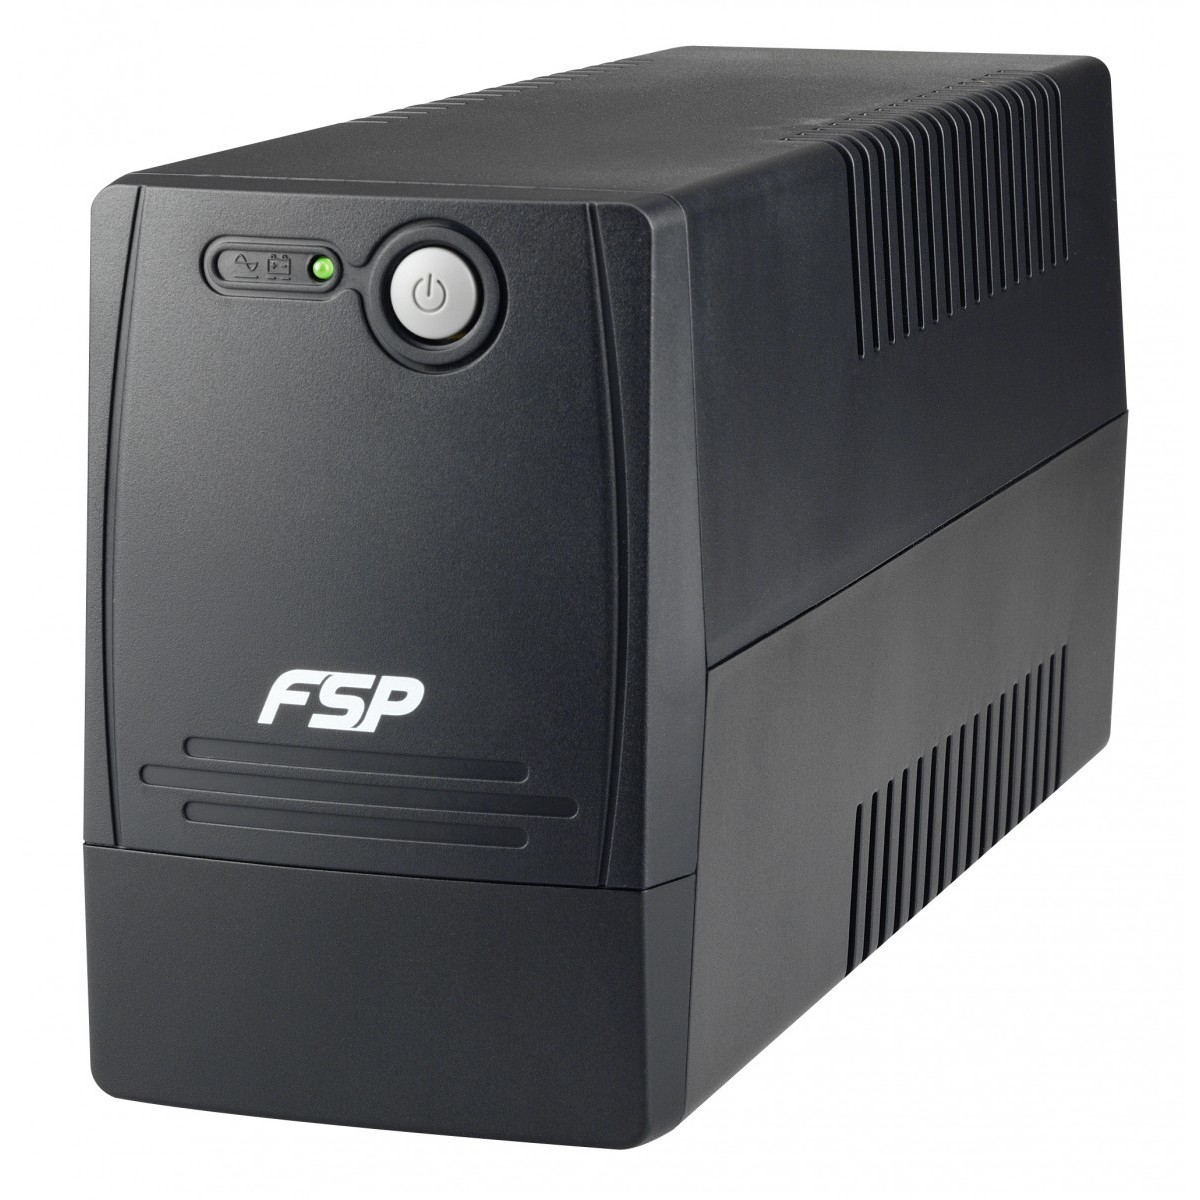 FSP FP 800 uninterruptible power supply (UPS)